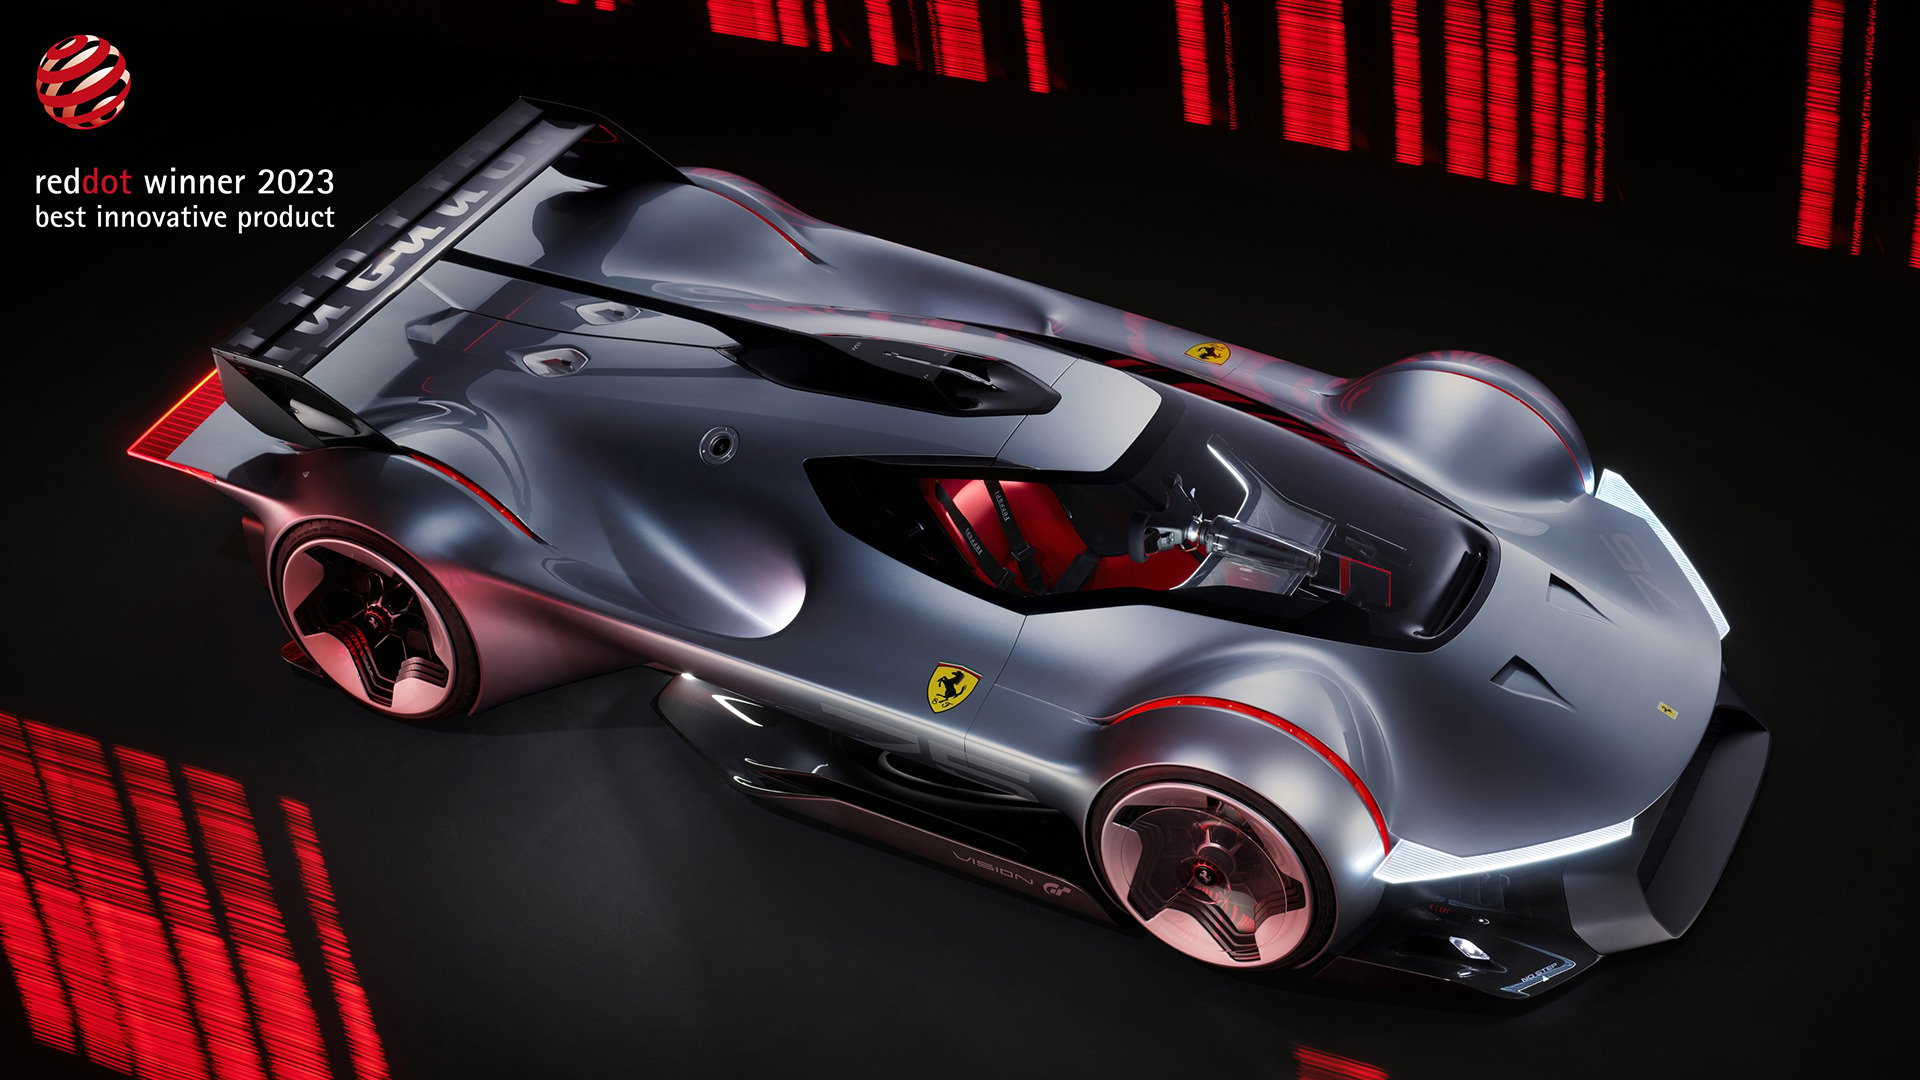 Four new Ferrari supercars confirmed for 2023 - The Supercar Blog